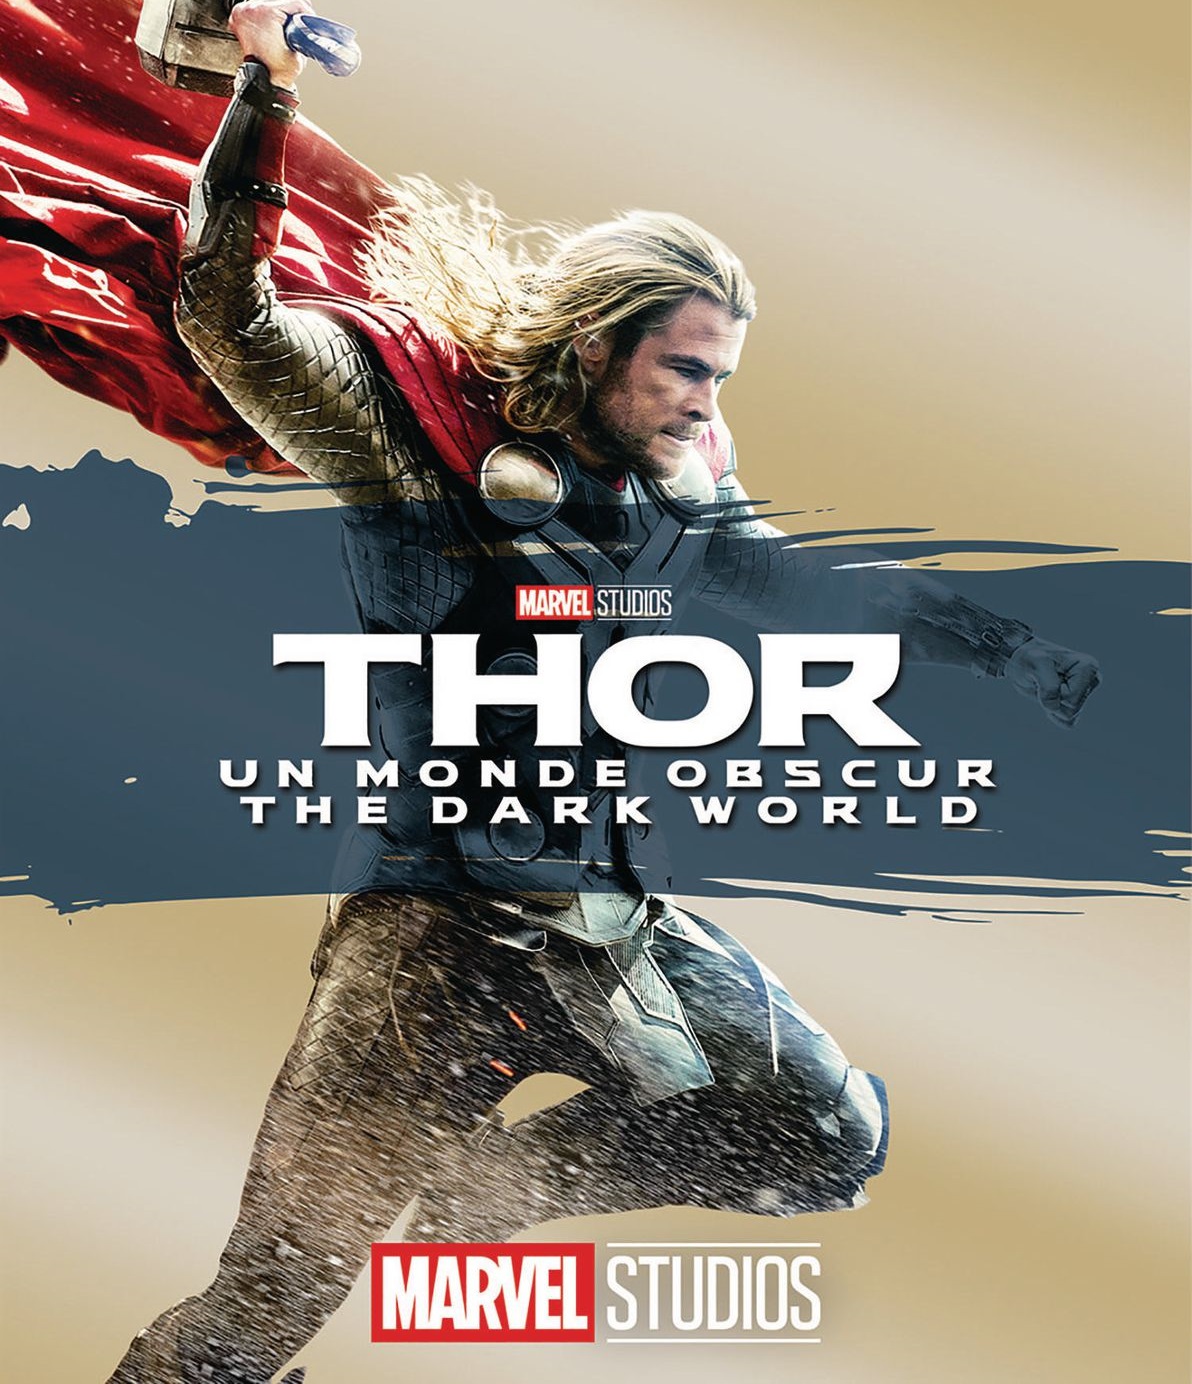 Thor The Dark World Blu Ray Poster.jpg